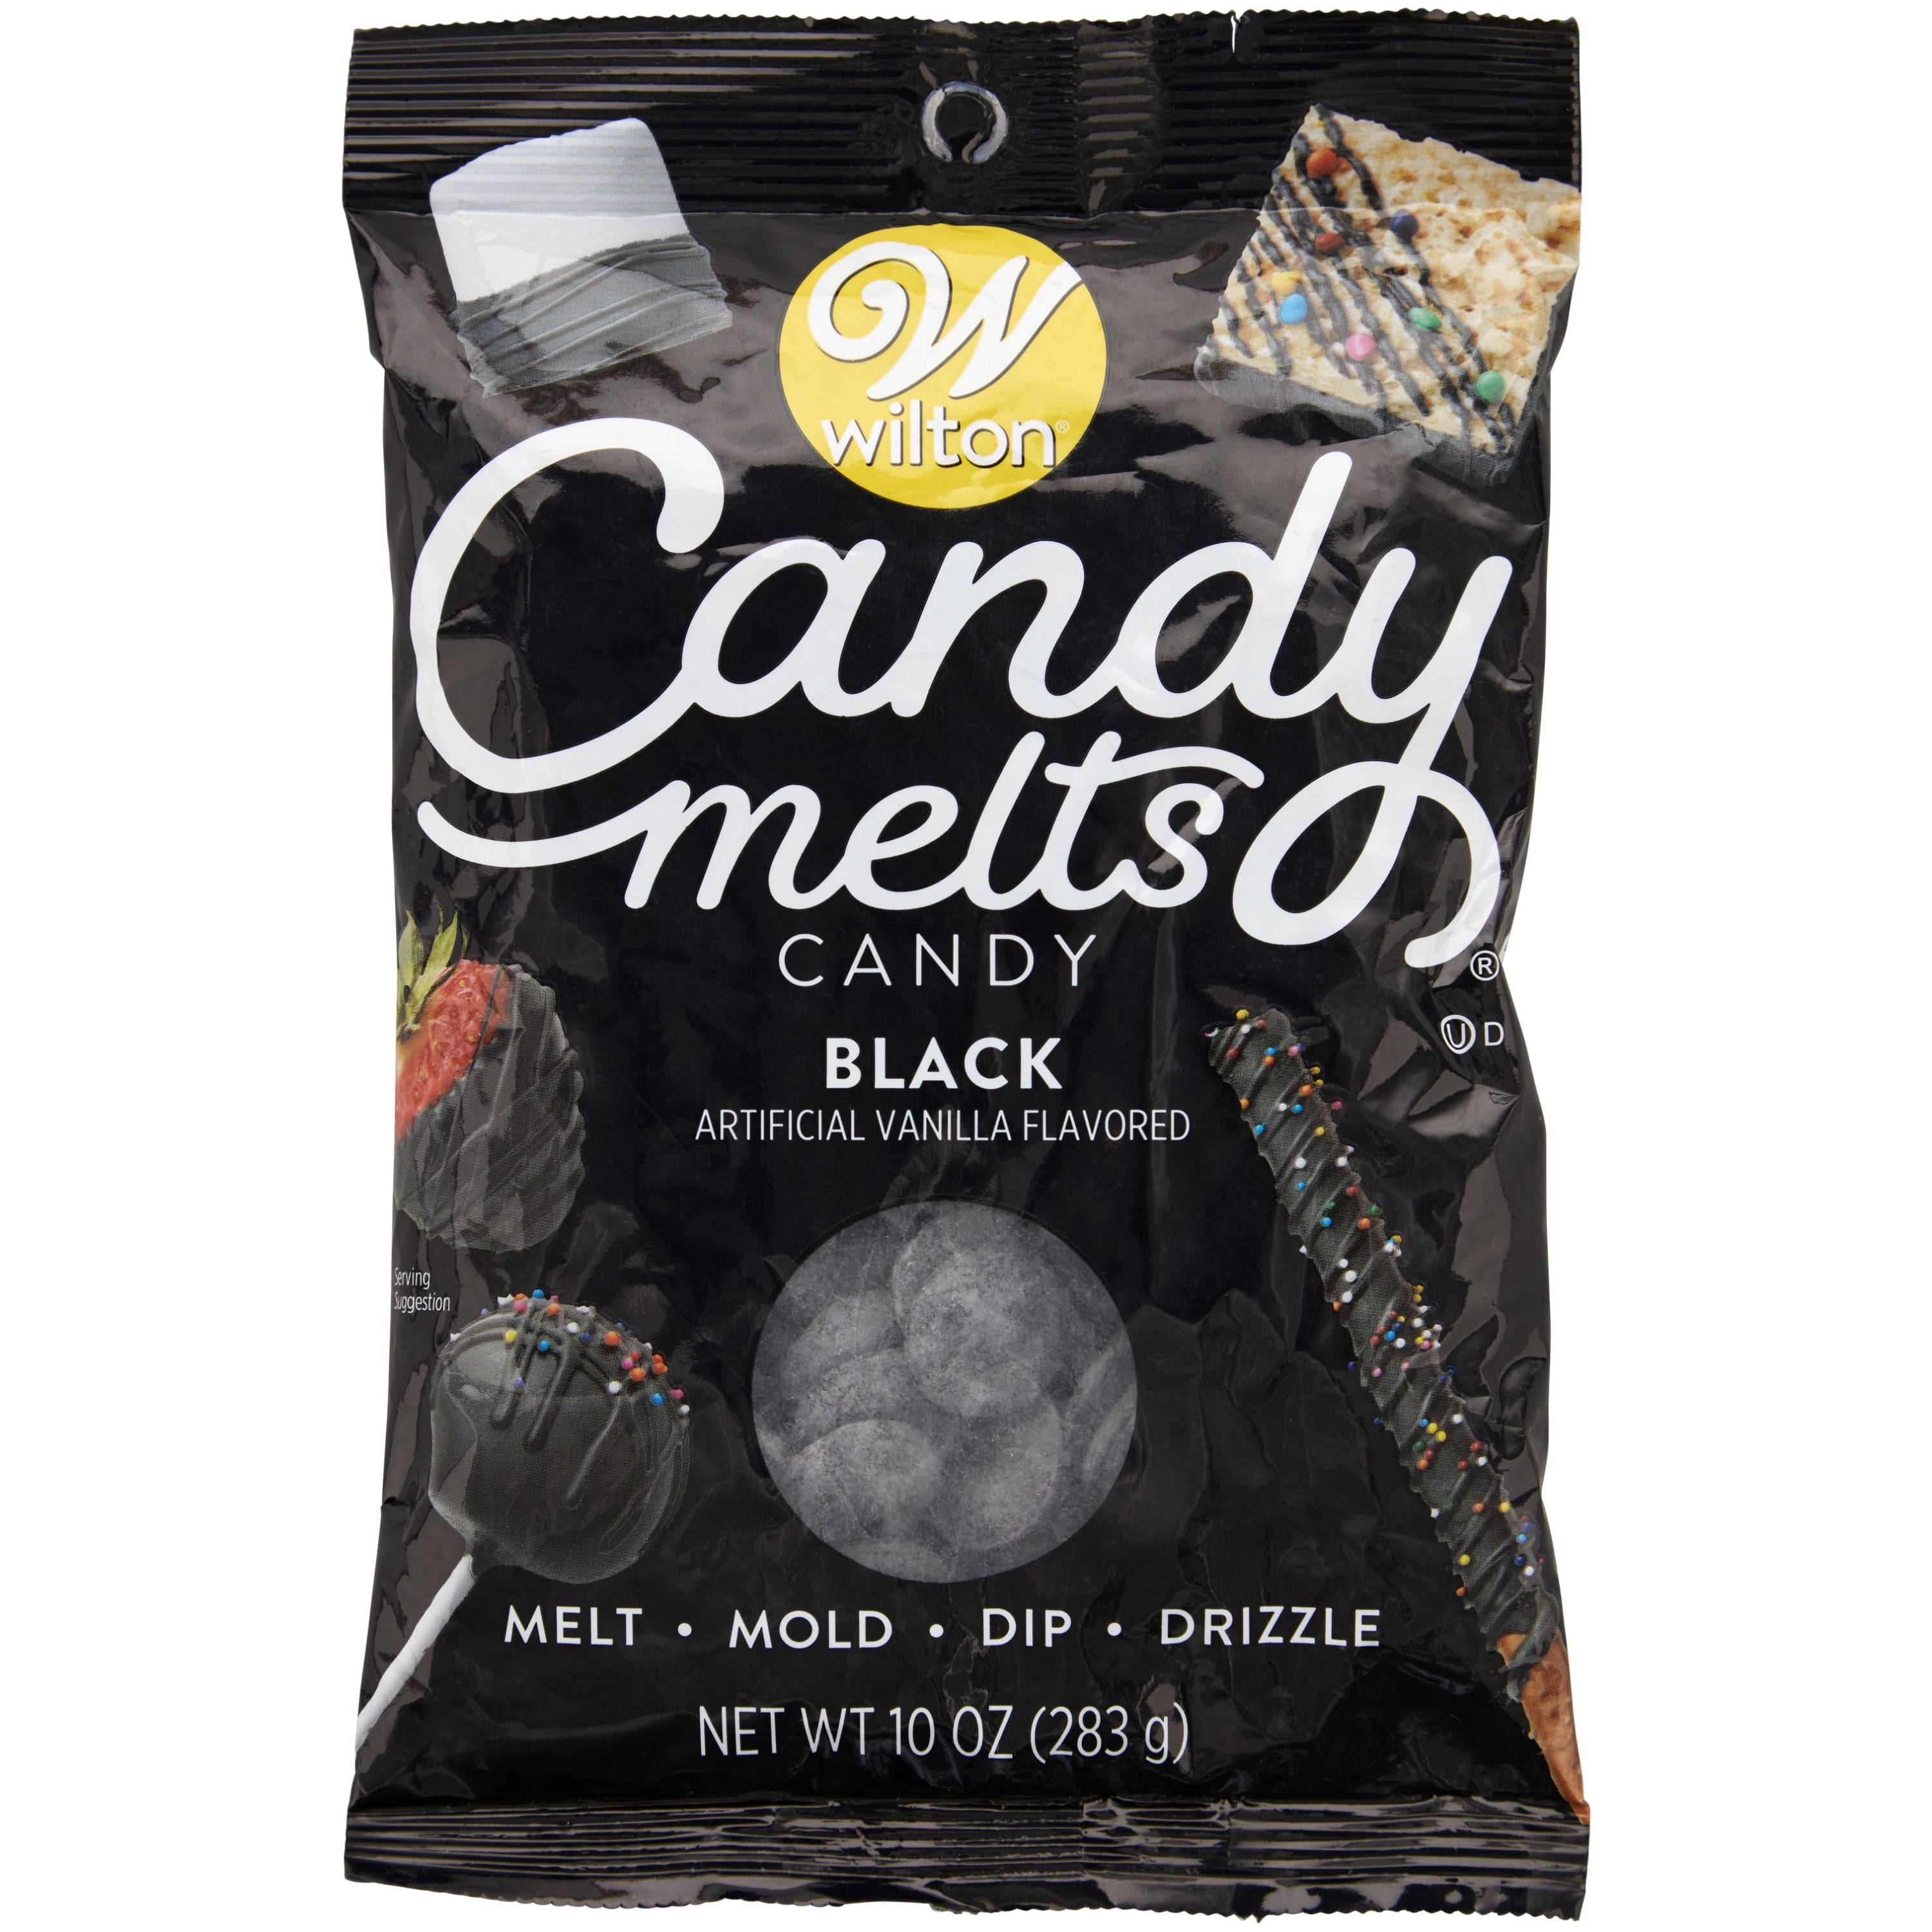 Wilton Black Candy Melts Candy, 10 oz. - Walmart.com